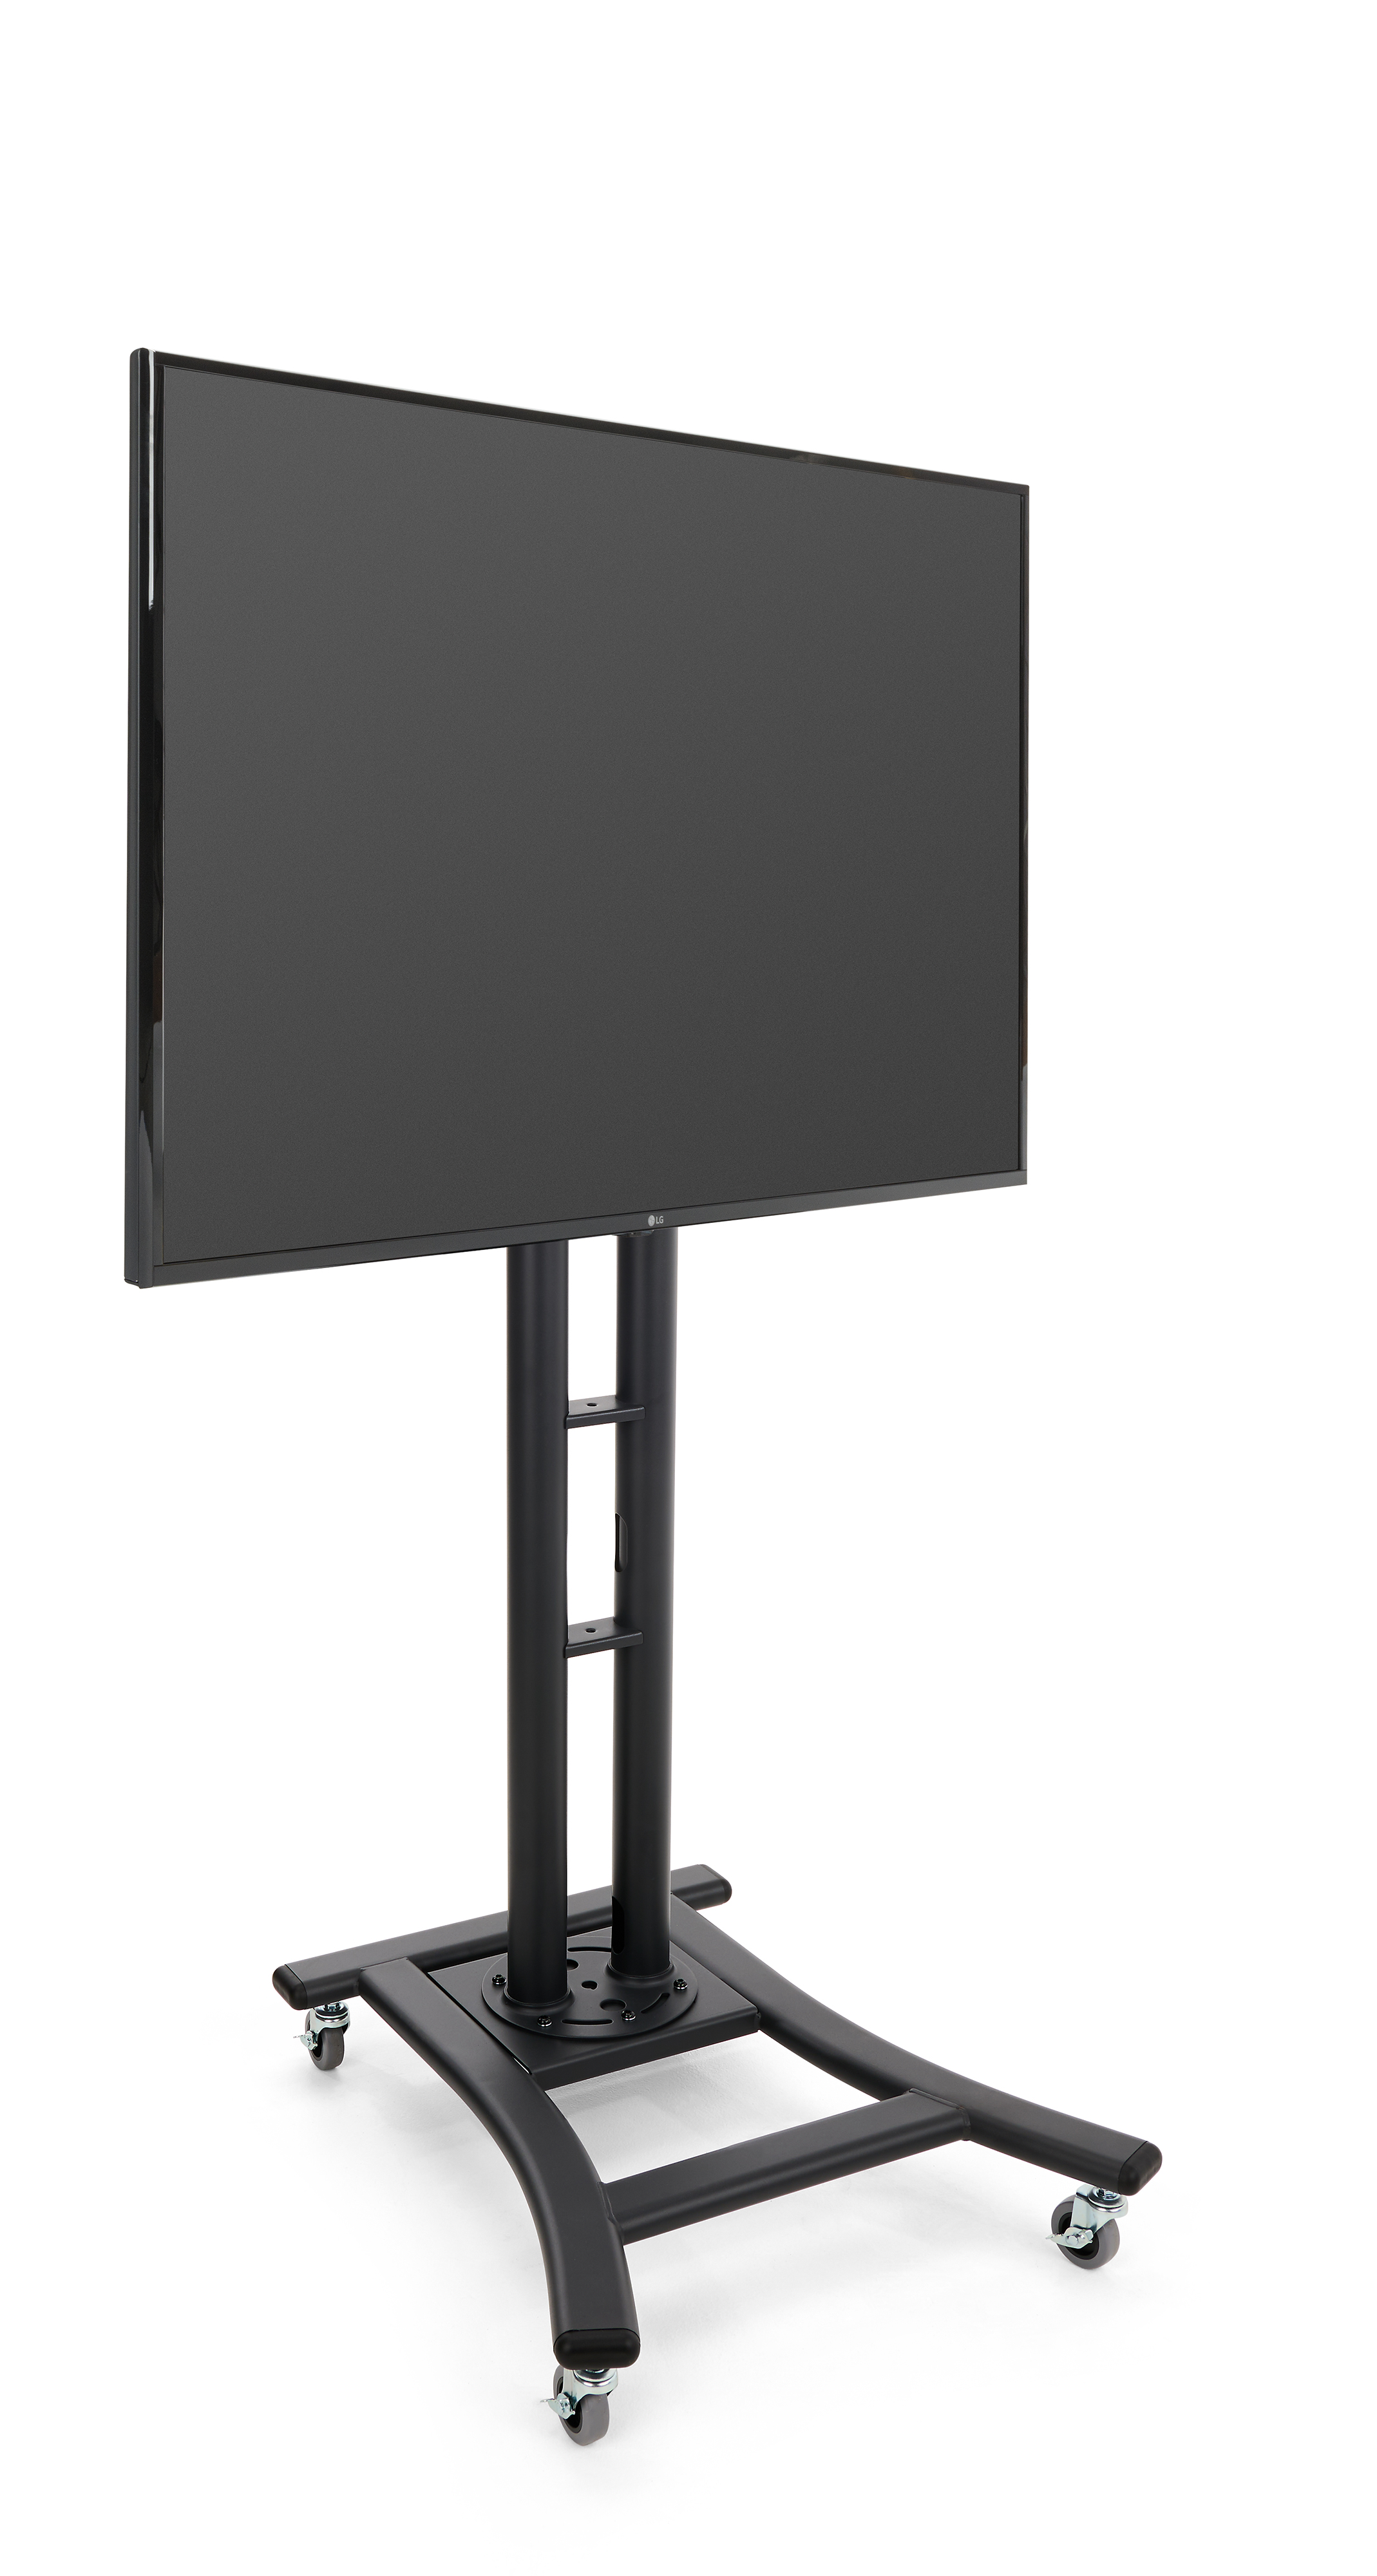 V7 TVCART2 - cart - for LCD display - matte black